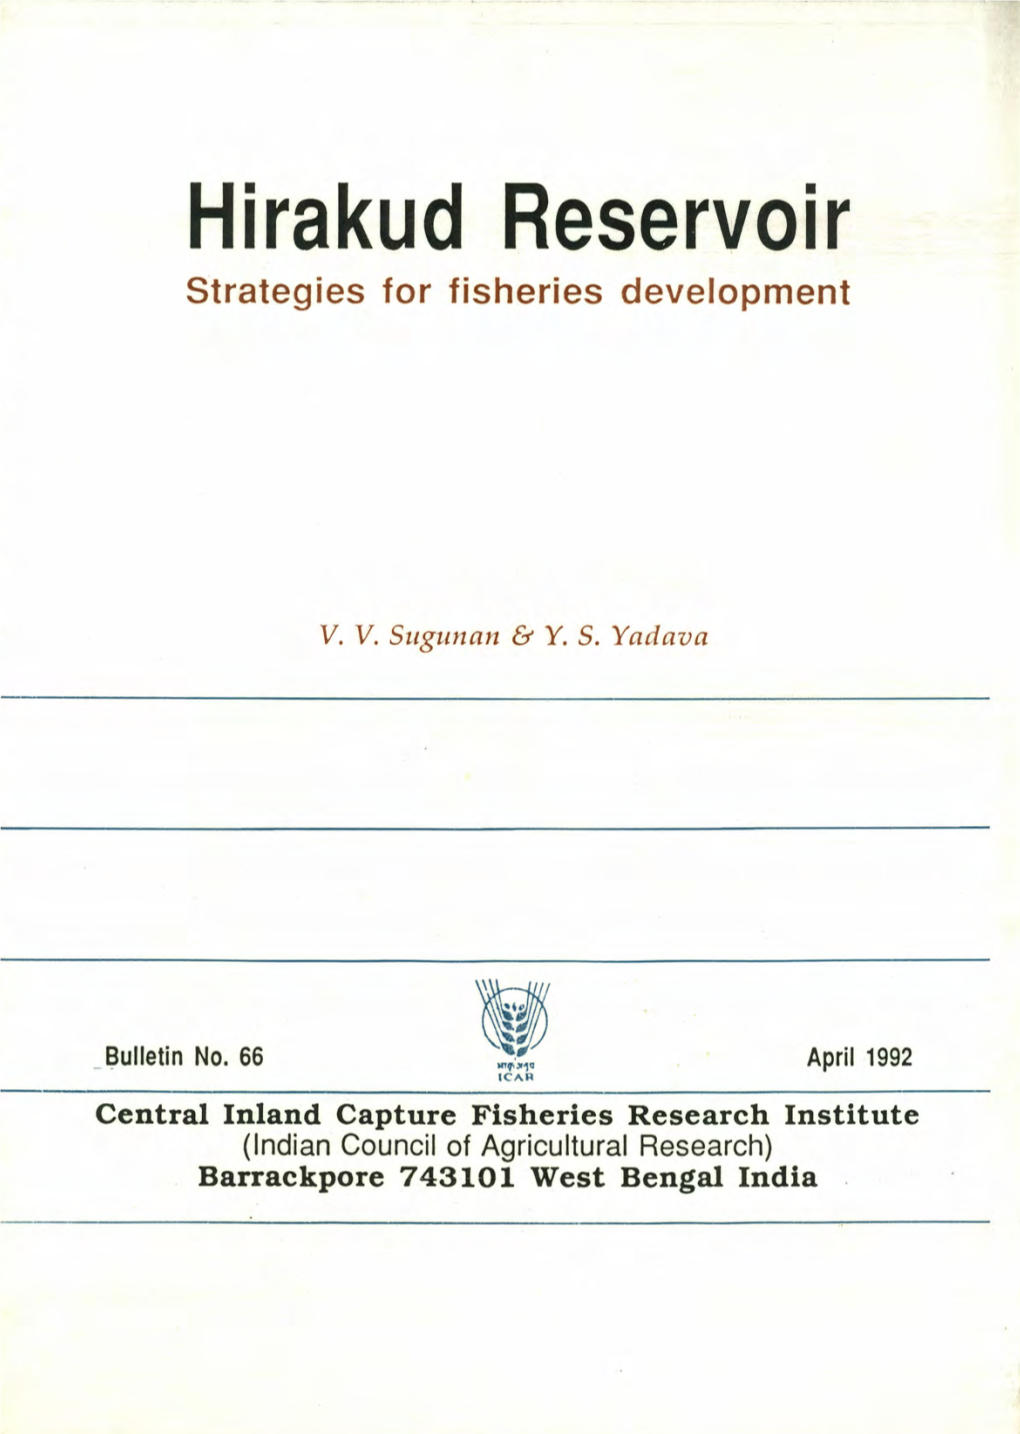 Hirakud Reservoir Strategies for Fisheries Development